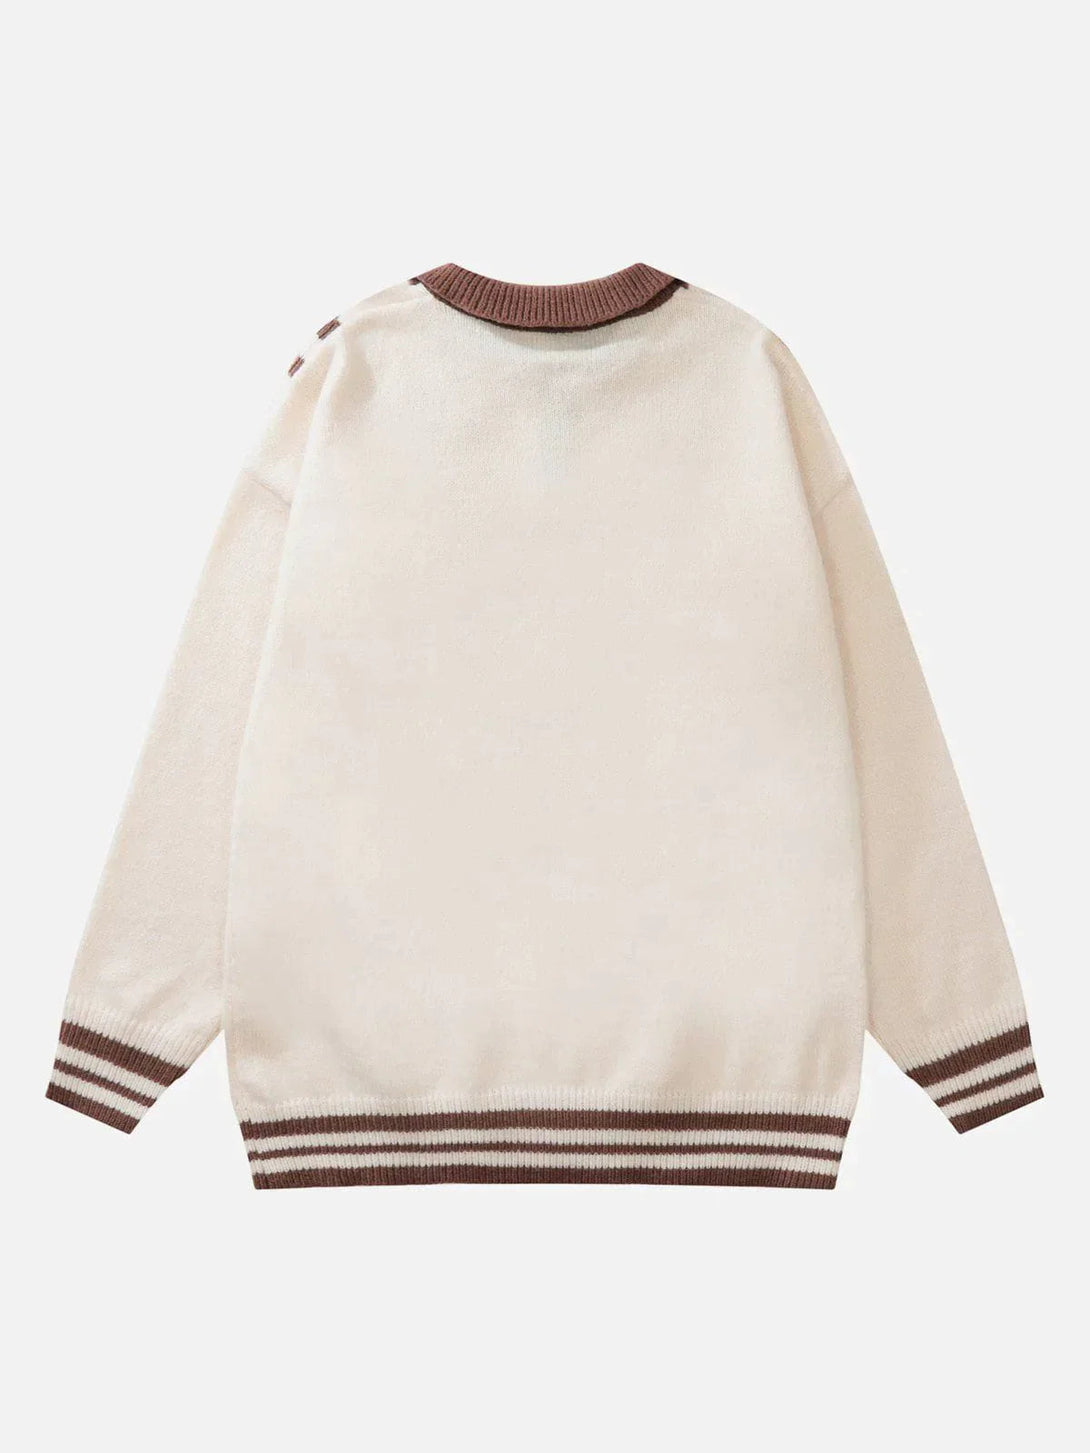 Majesda® - Preppy Polo Collar Sweater outfit ideas streetwear fashion